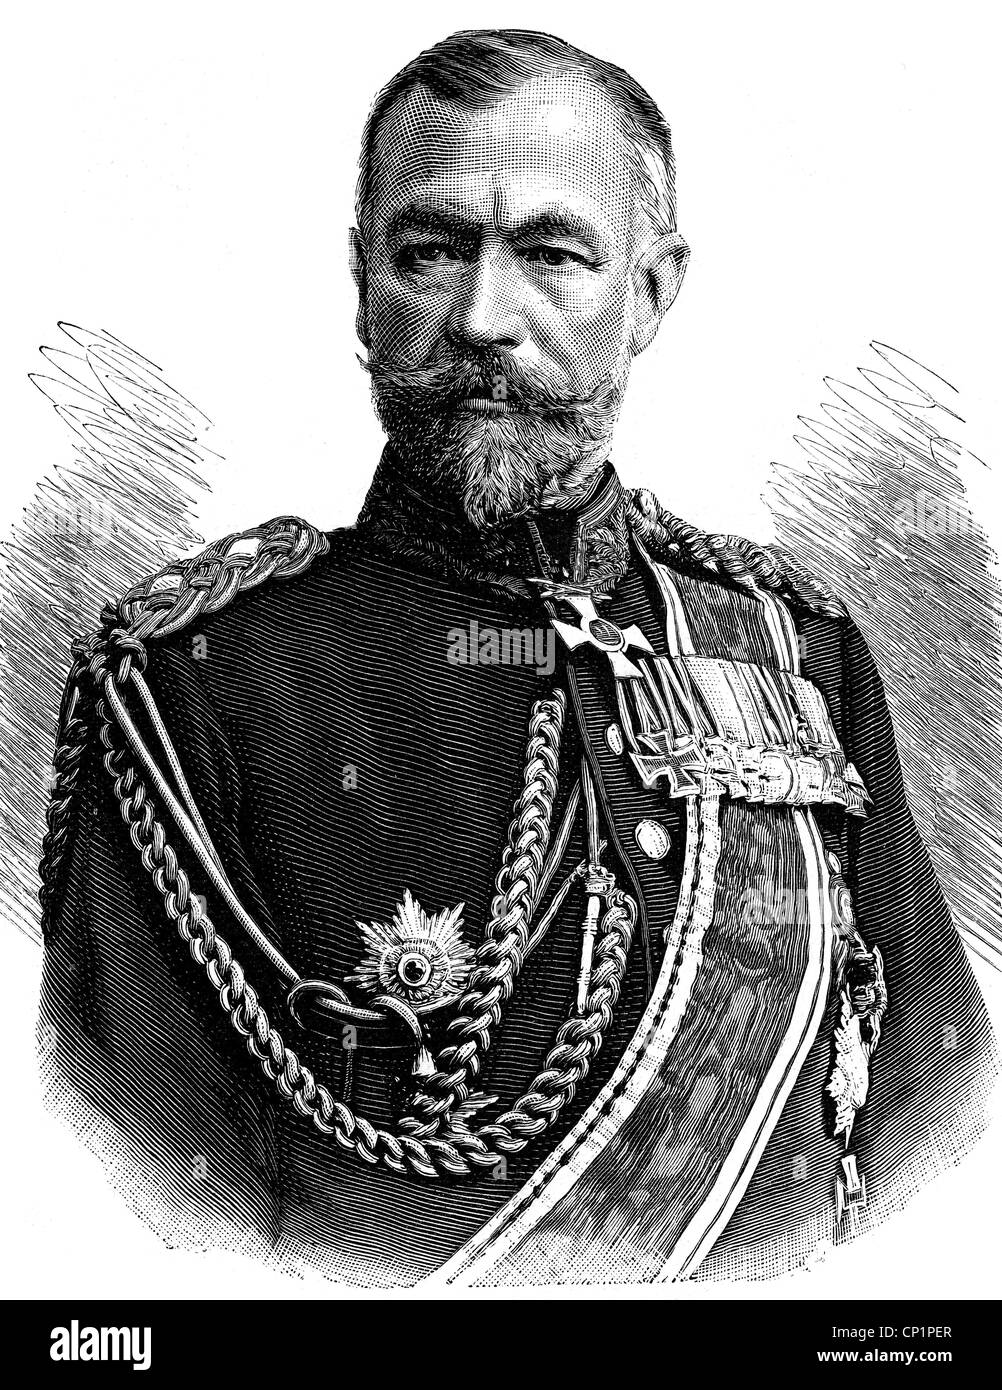 Bronsart von Schellendorff, Walther, 21.12.1833 - 12.12.1914, Prussian general, Minister of War 1893 - 1896, portrait, wood engraving, 1894, Stock Photo